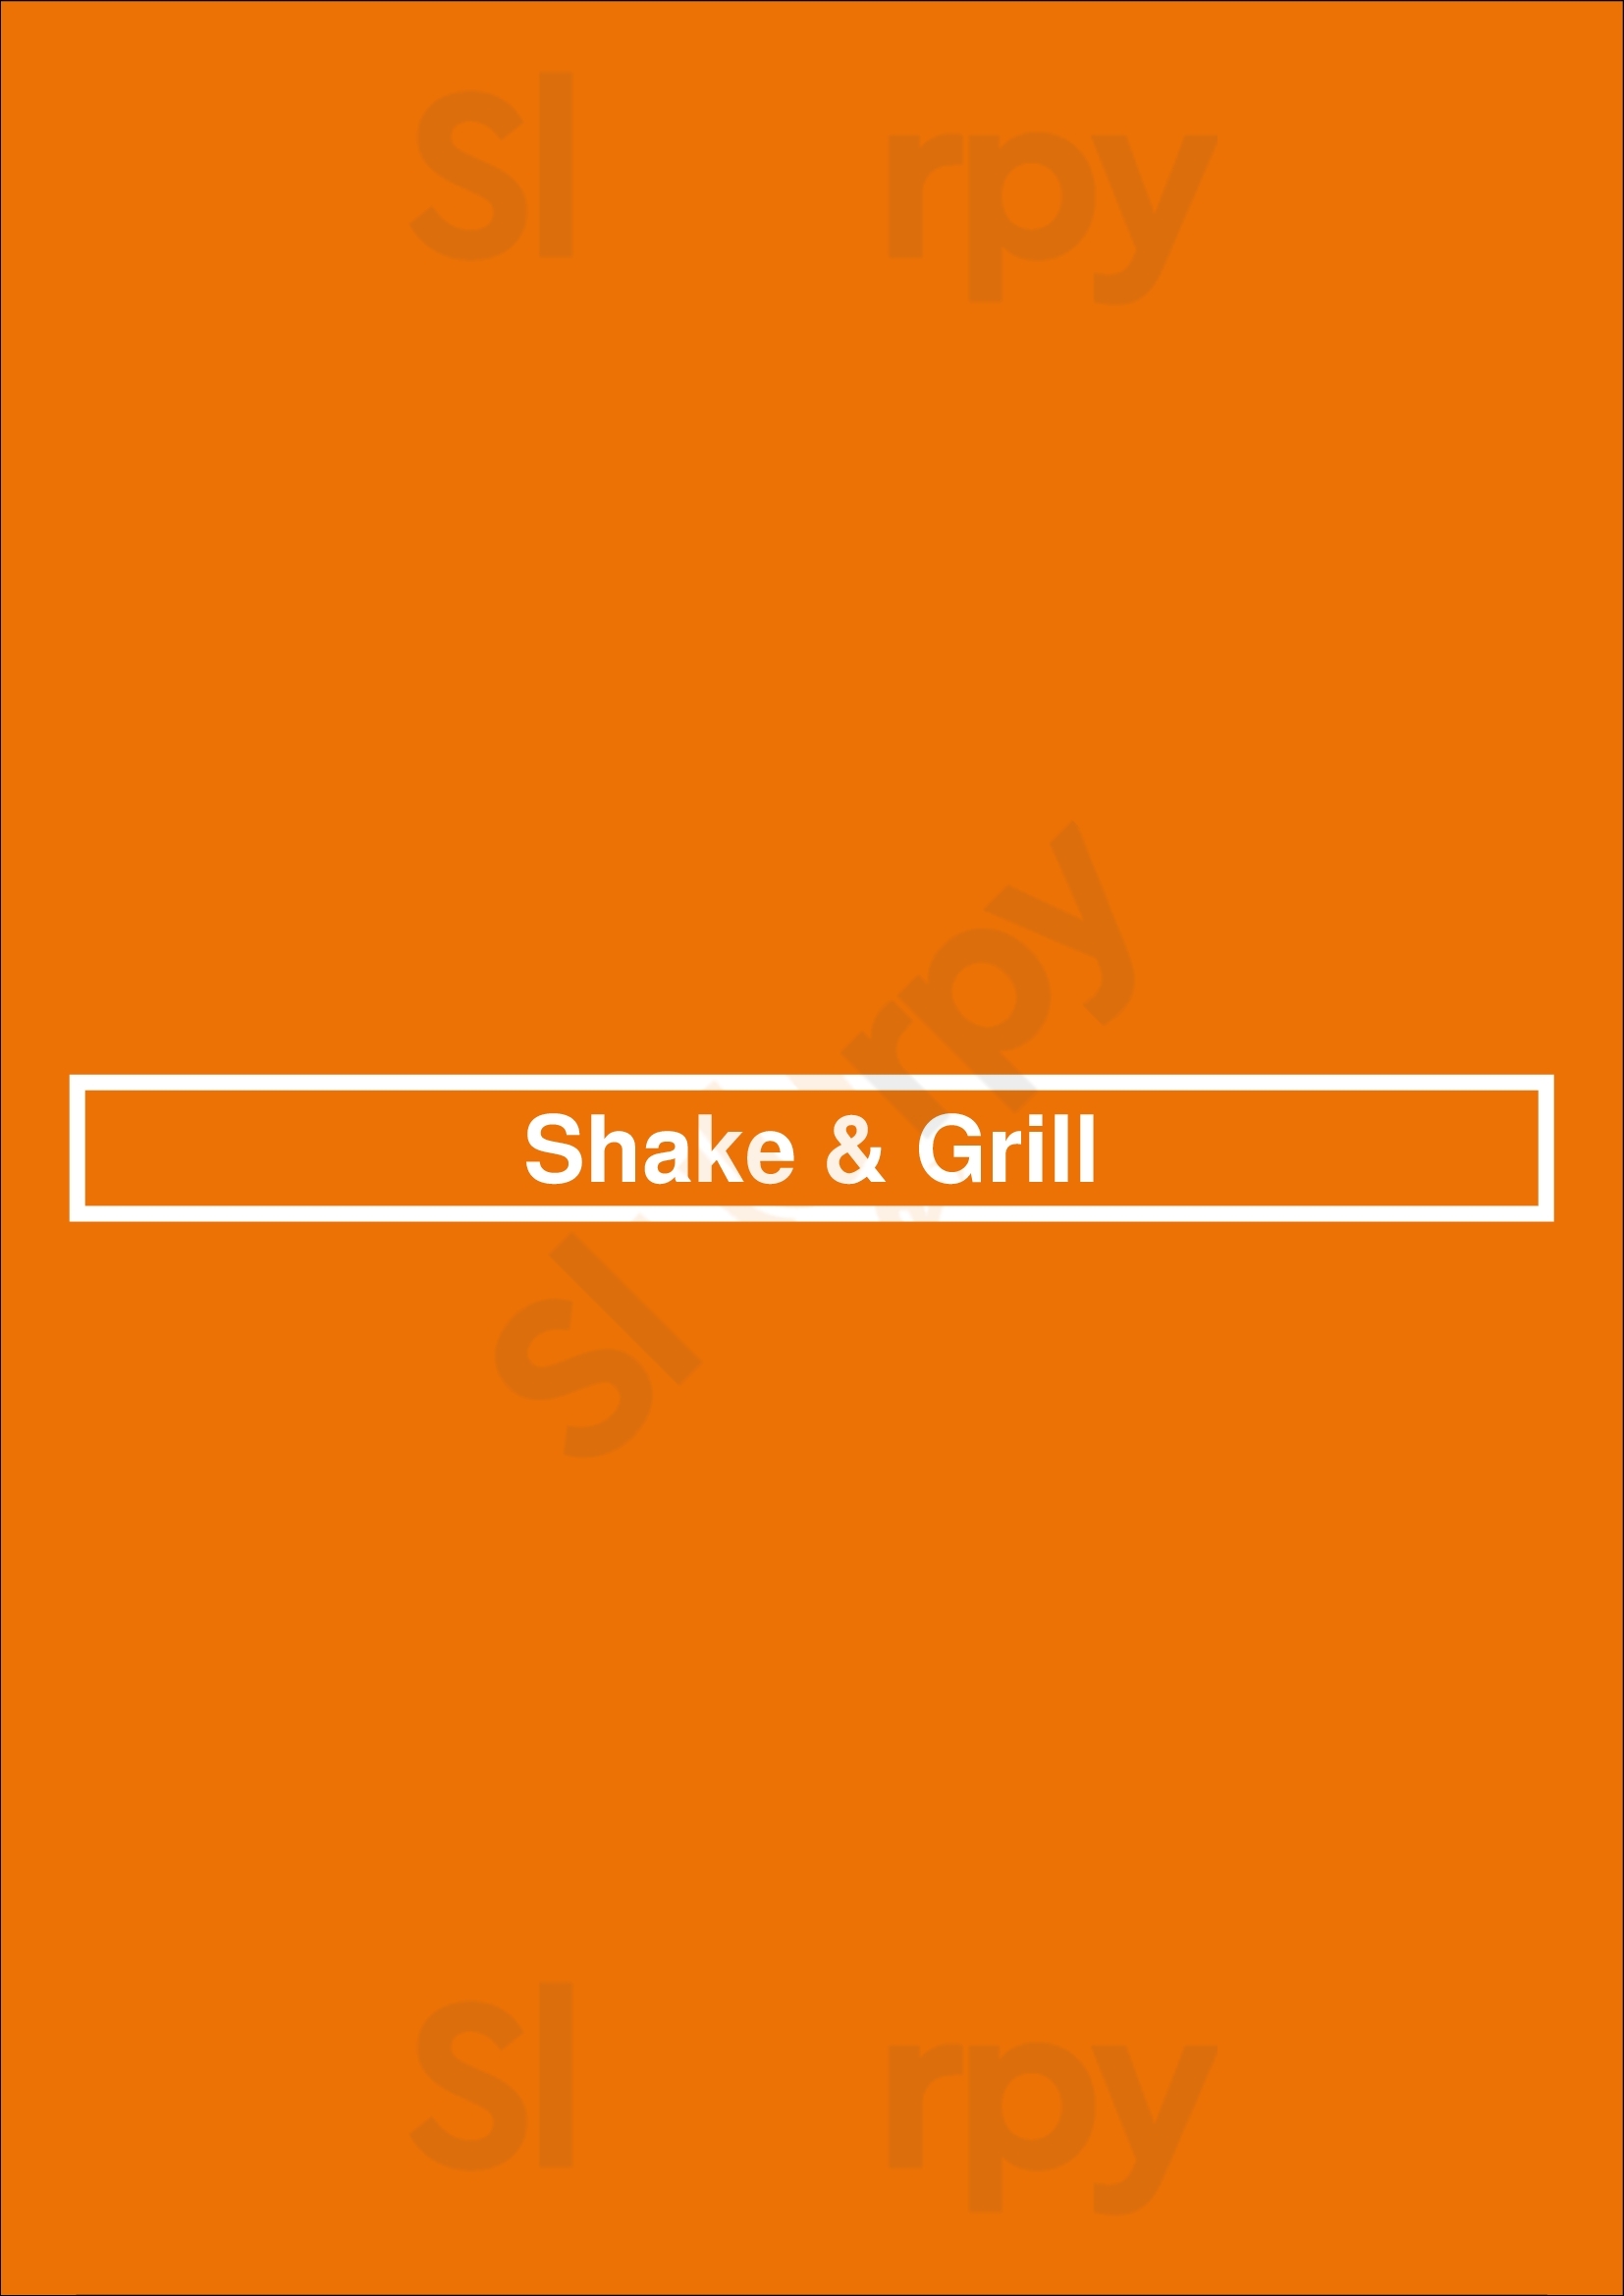 Shake & Grill Walsall Menu - 1